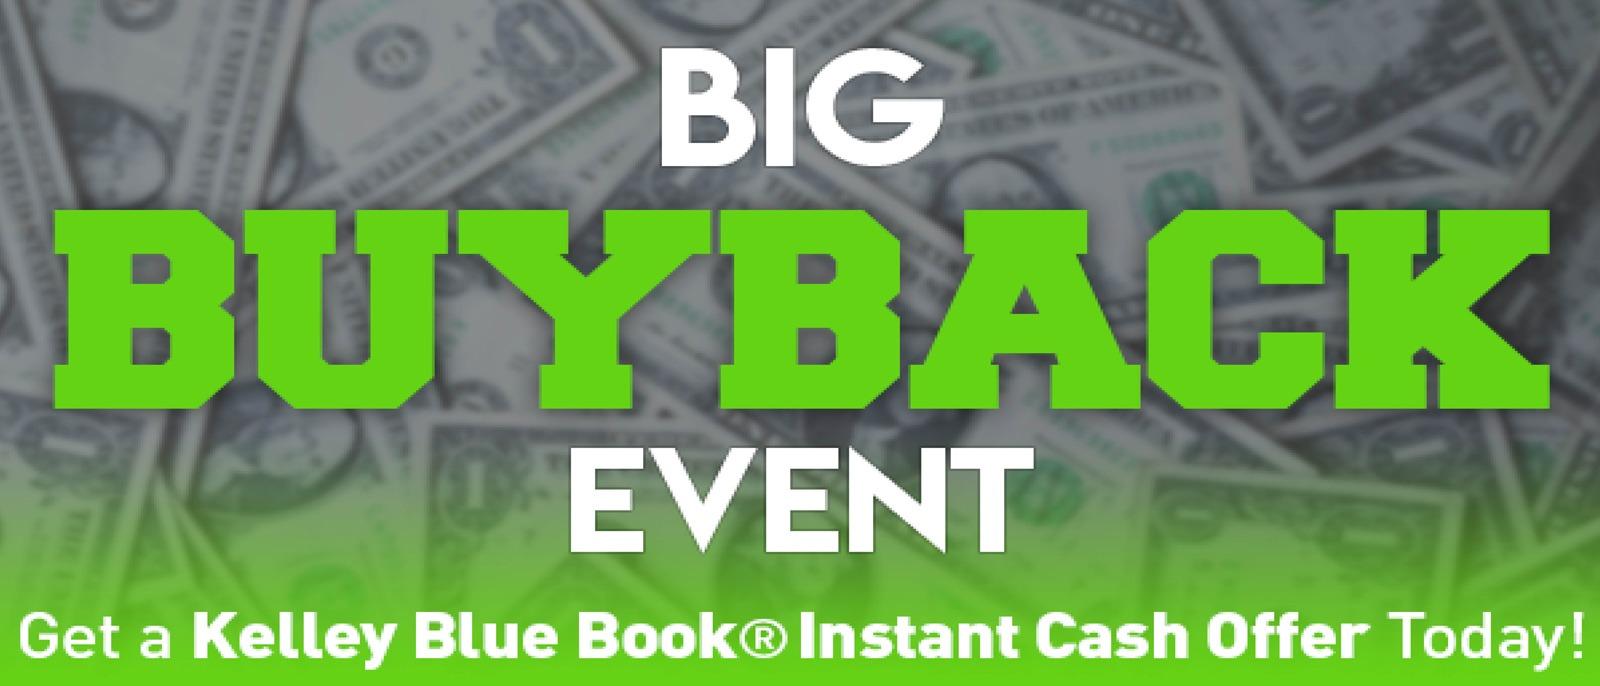 Big Buyback Event